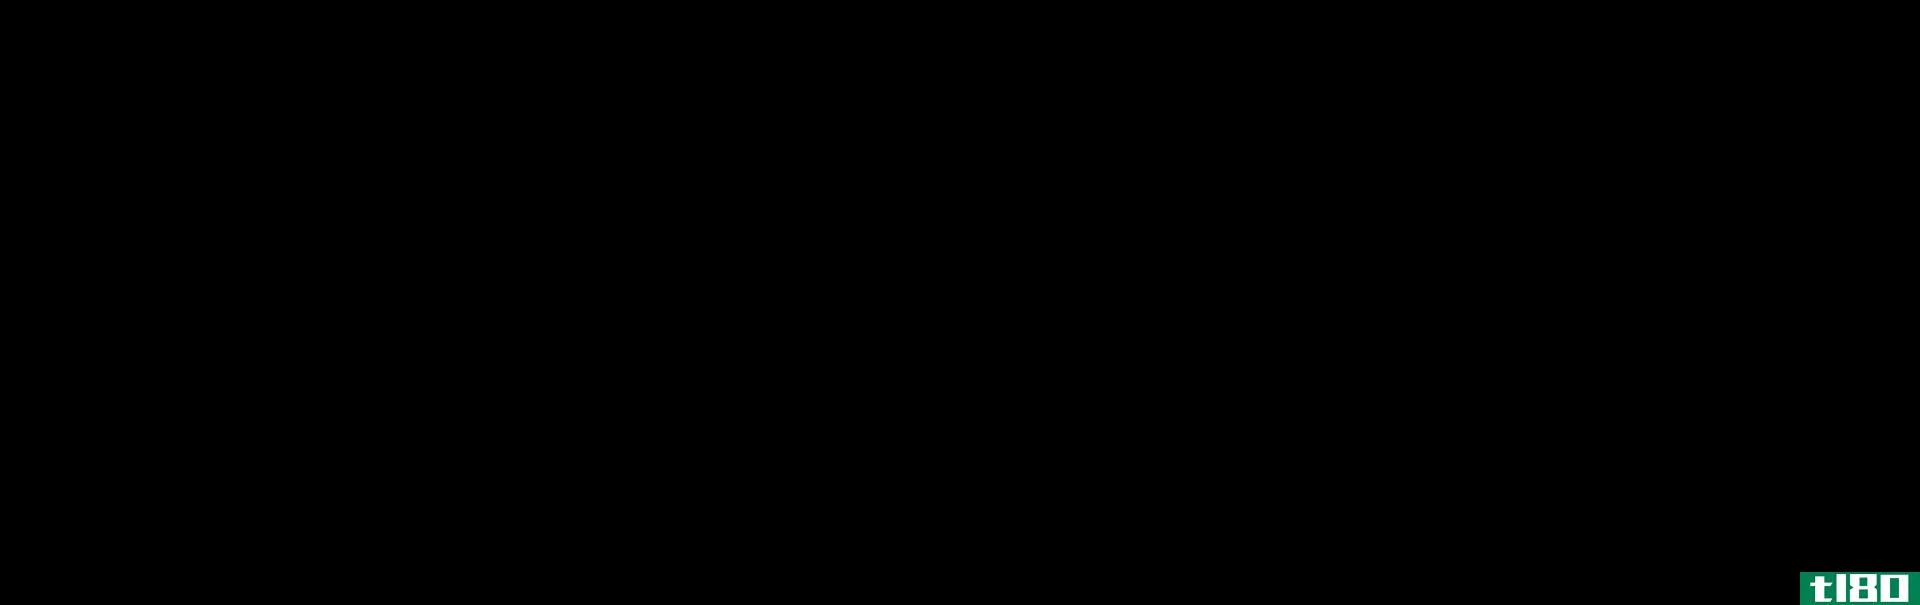 十六醇(cetyl alcohol)和硬脂醇(stearyl alcohol)的区别